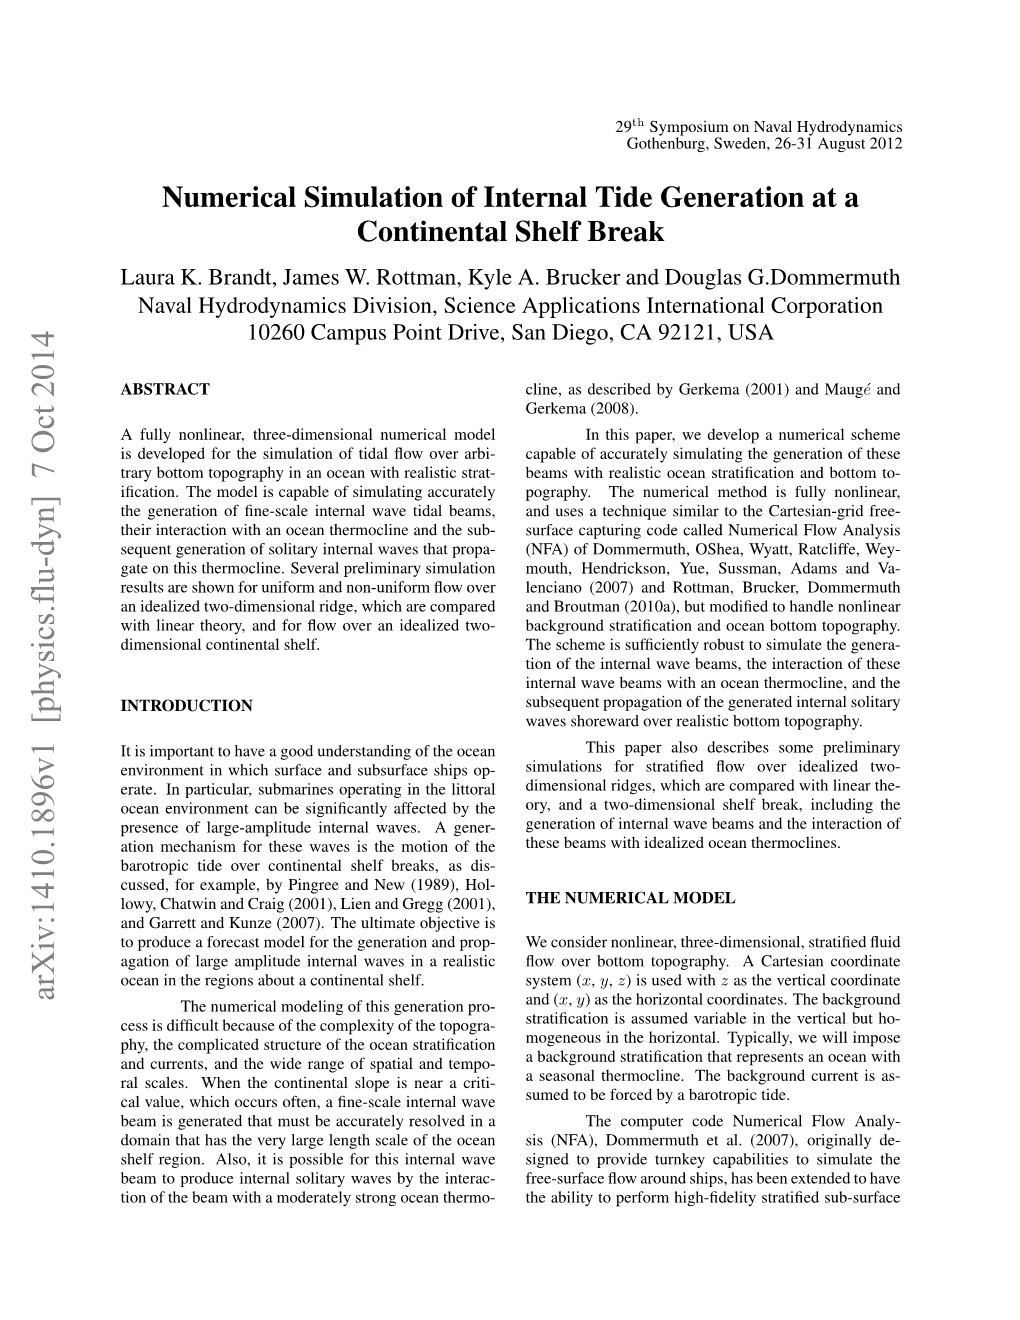 Numerical Simulation of Internal Tide Generation at a Continental Shelf Break Laura K